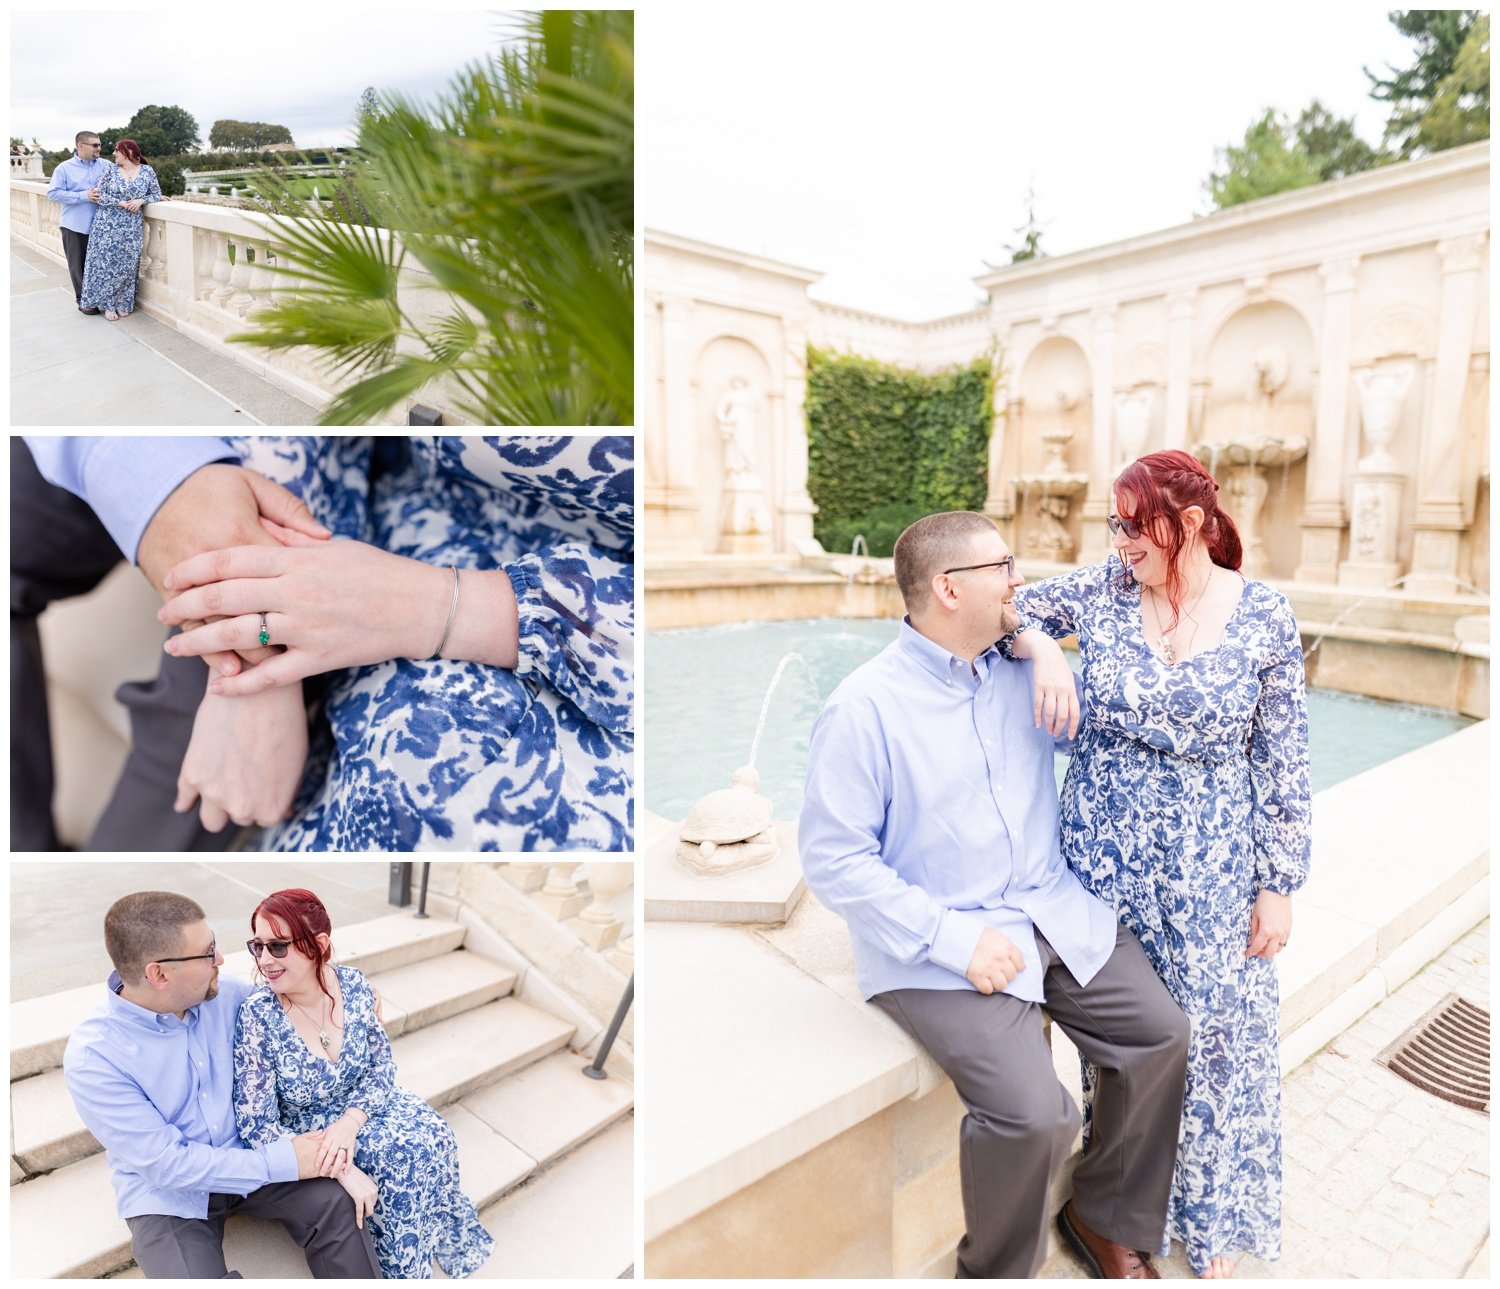 Engagement-photo-inspiration-Longwood-Gardens-1.jpg